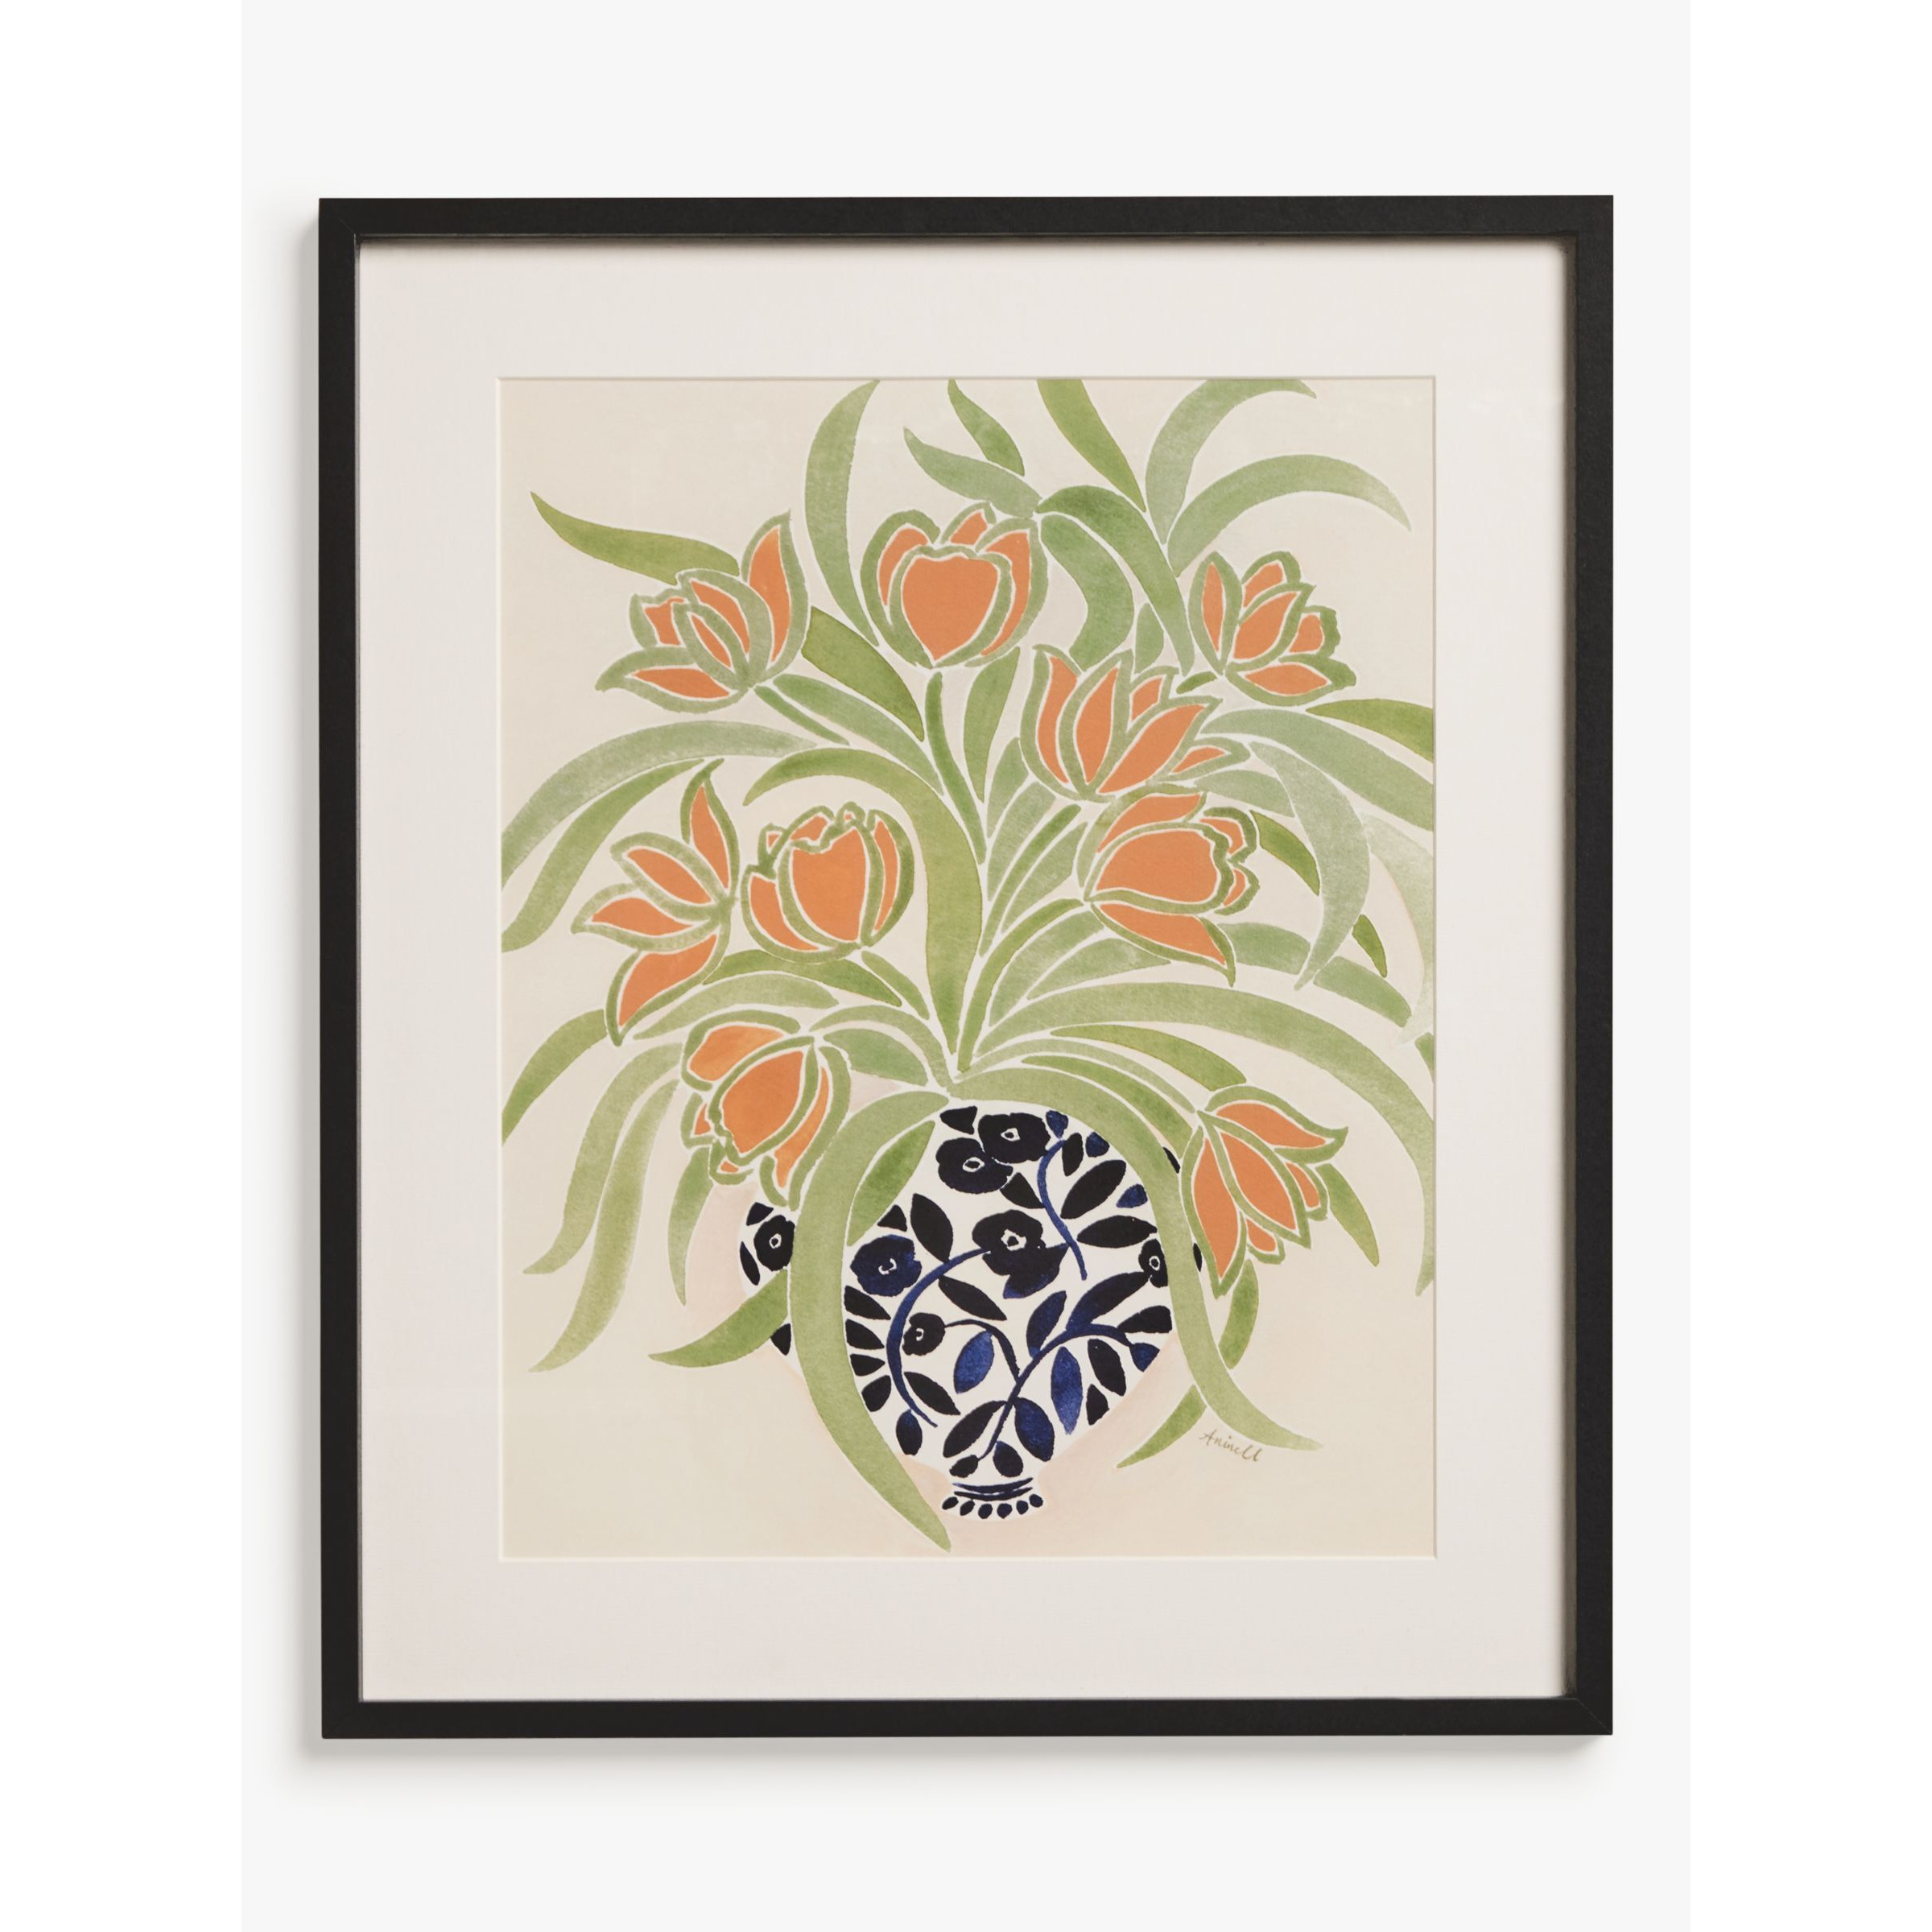 John Lewis La Poire 'Apricot Tulips' Framed Print & Mount, 62 x 52cm, Green/Orange - image 1